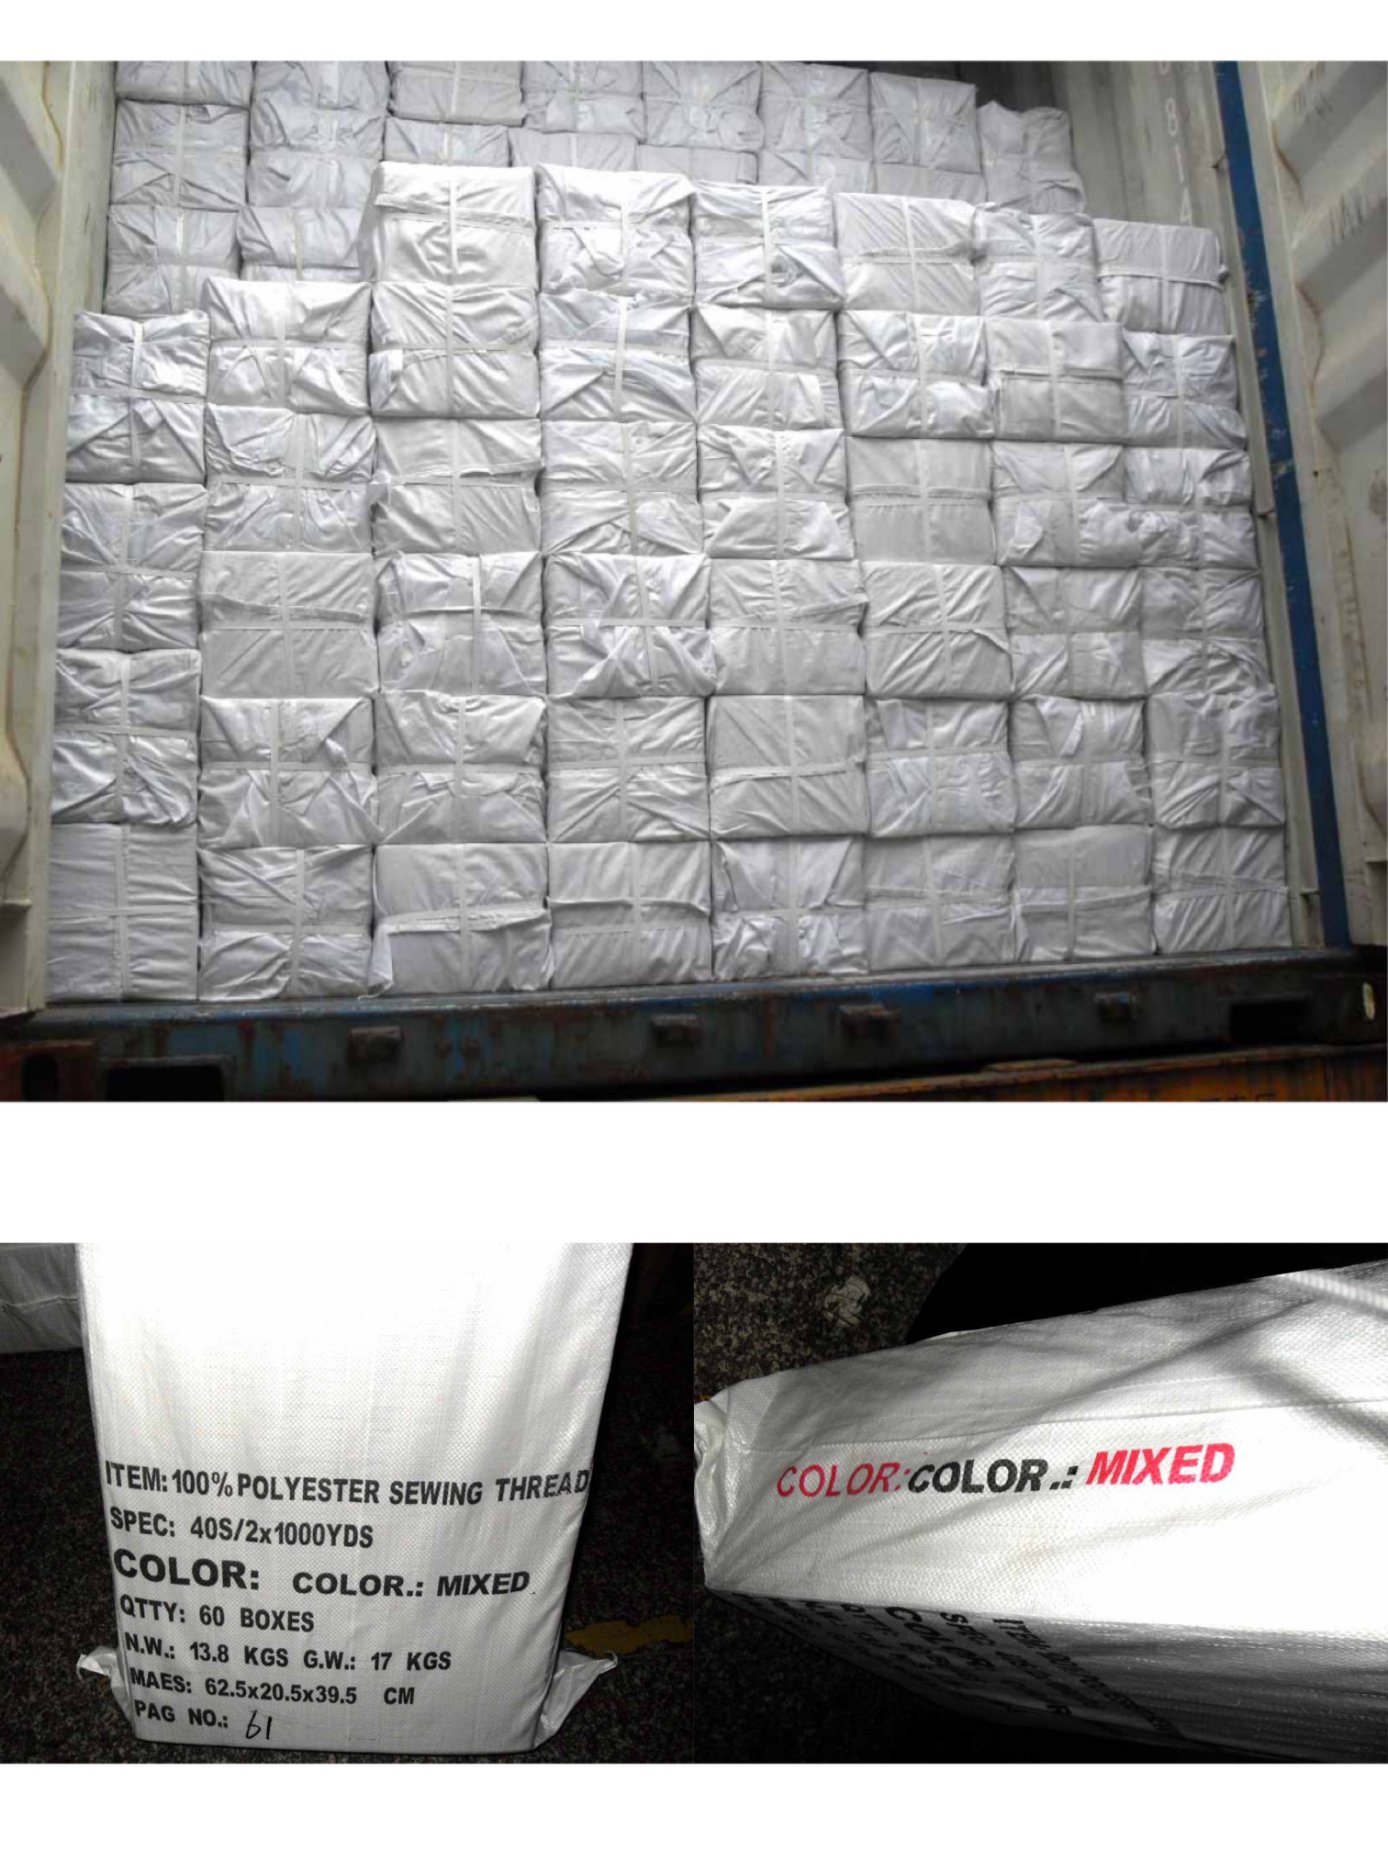 1000yds Spun 100% Polyester 40s/2 Zere Dinki Polysew Sewing Machine Cone Thread Popular in Nigeria Market